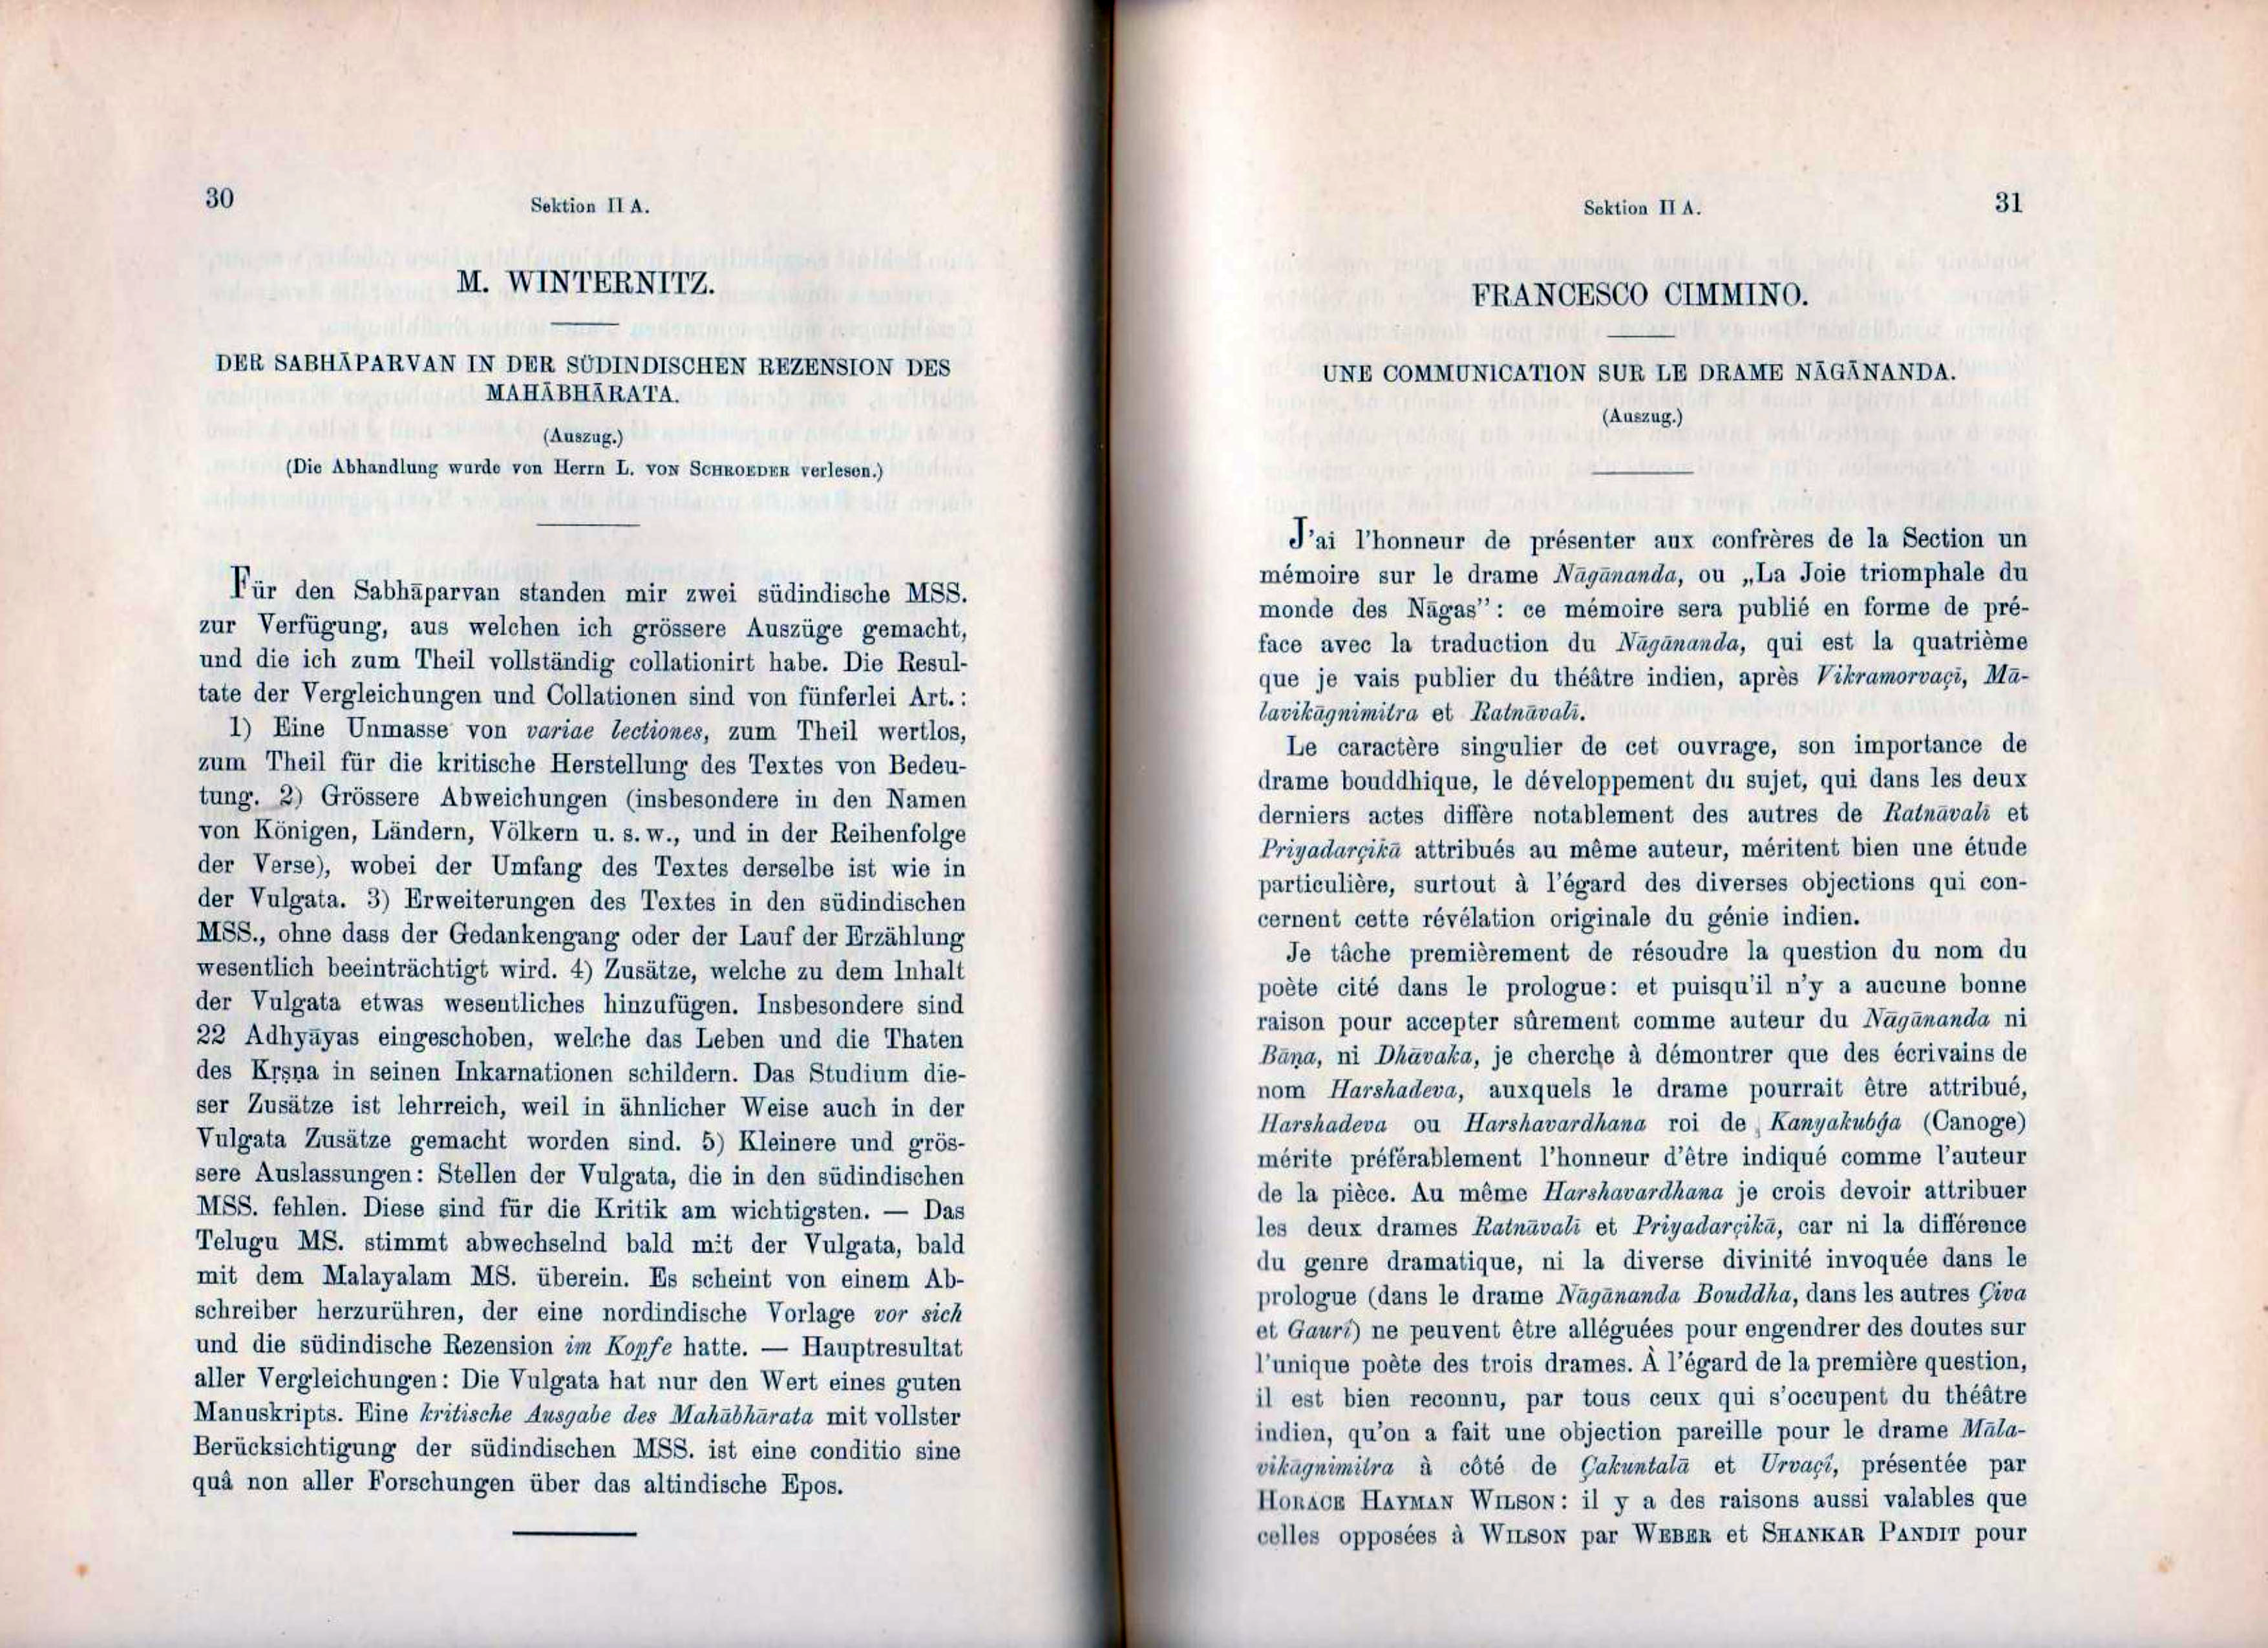 Une communication sur le drame Nagananda - Michele Cimmino (1902)